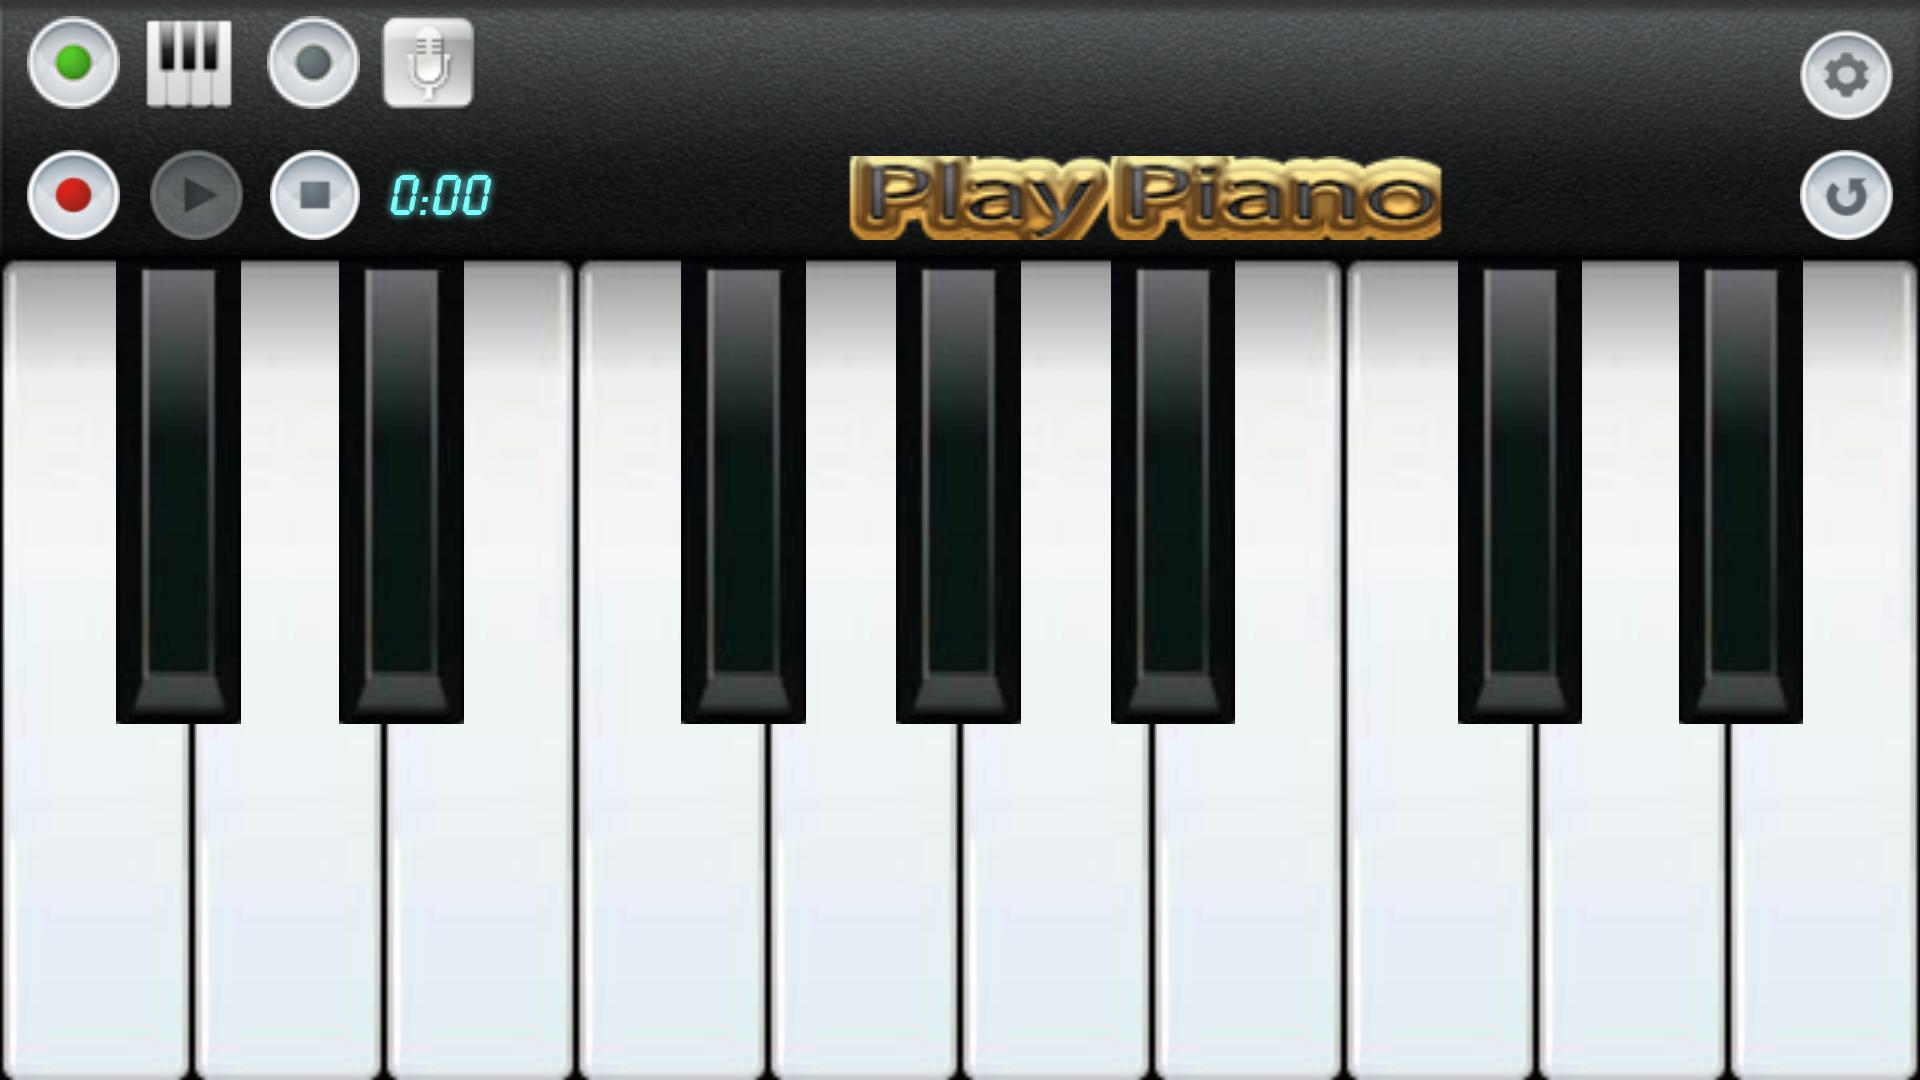 Piano play song. Клавиатура пианино 4 октавы. Клавиатура пианино. Клавиатура пианино 2 октавы. Клавиатура фоно.